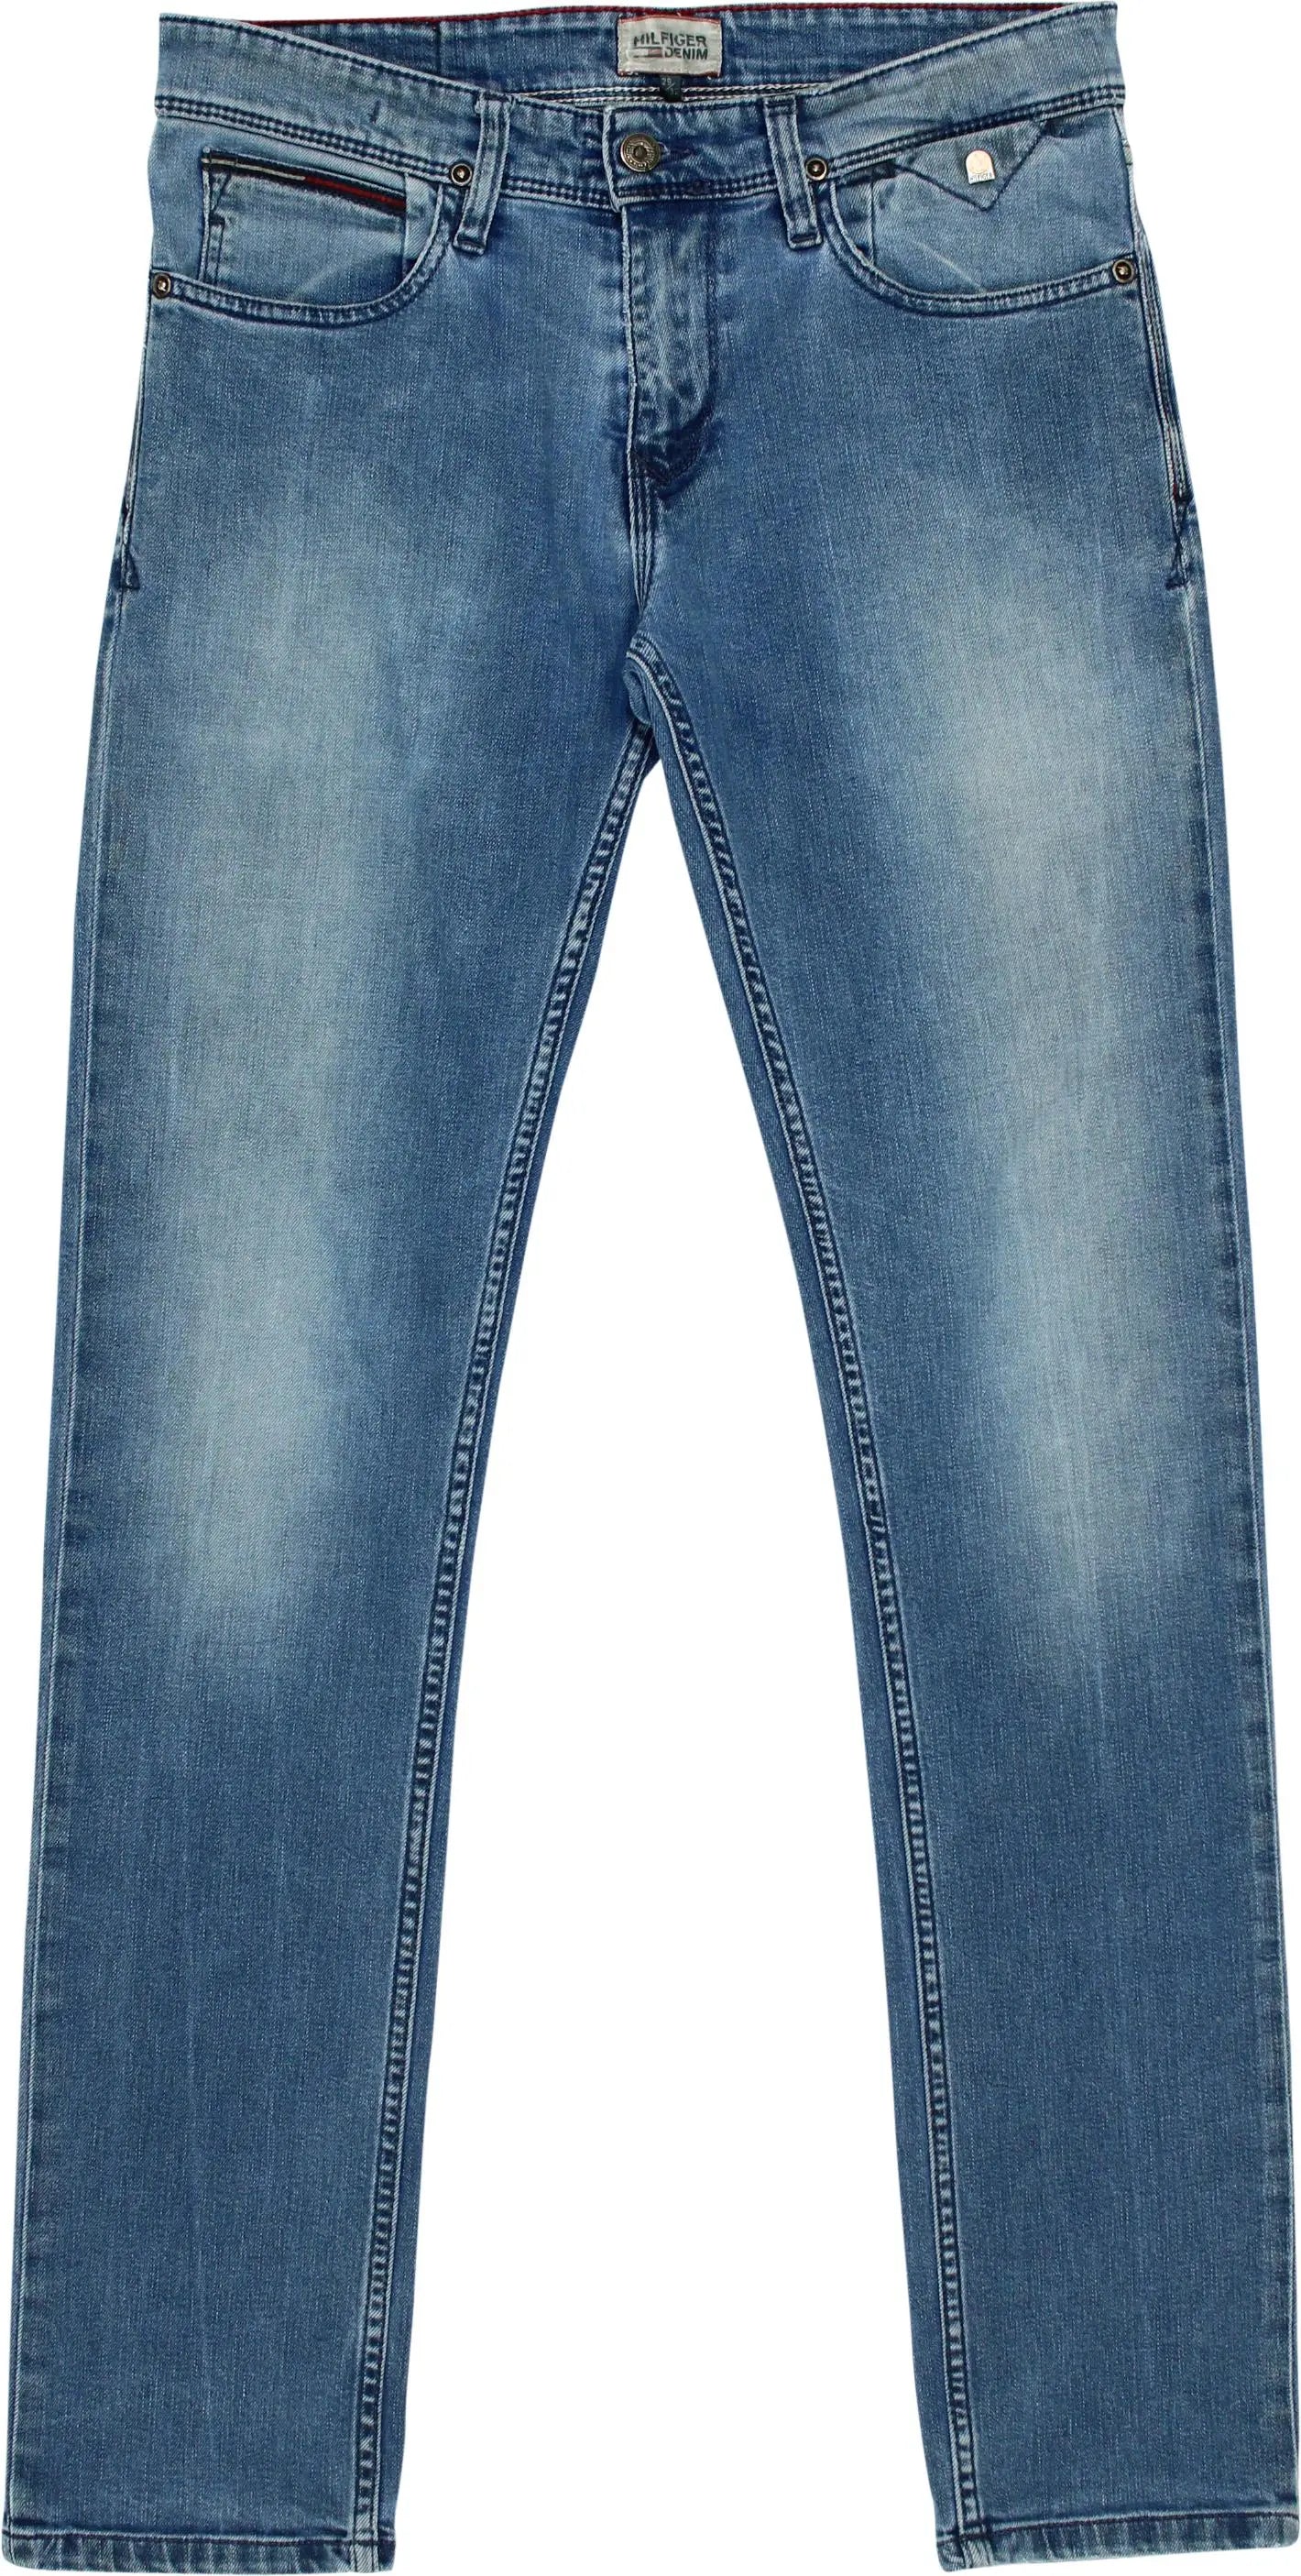 Tommy Hilfiger - Tommy Hilfiger Scanton Skinny Fit Jeans- ThriftTale.com - Vintage and second handclothing